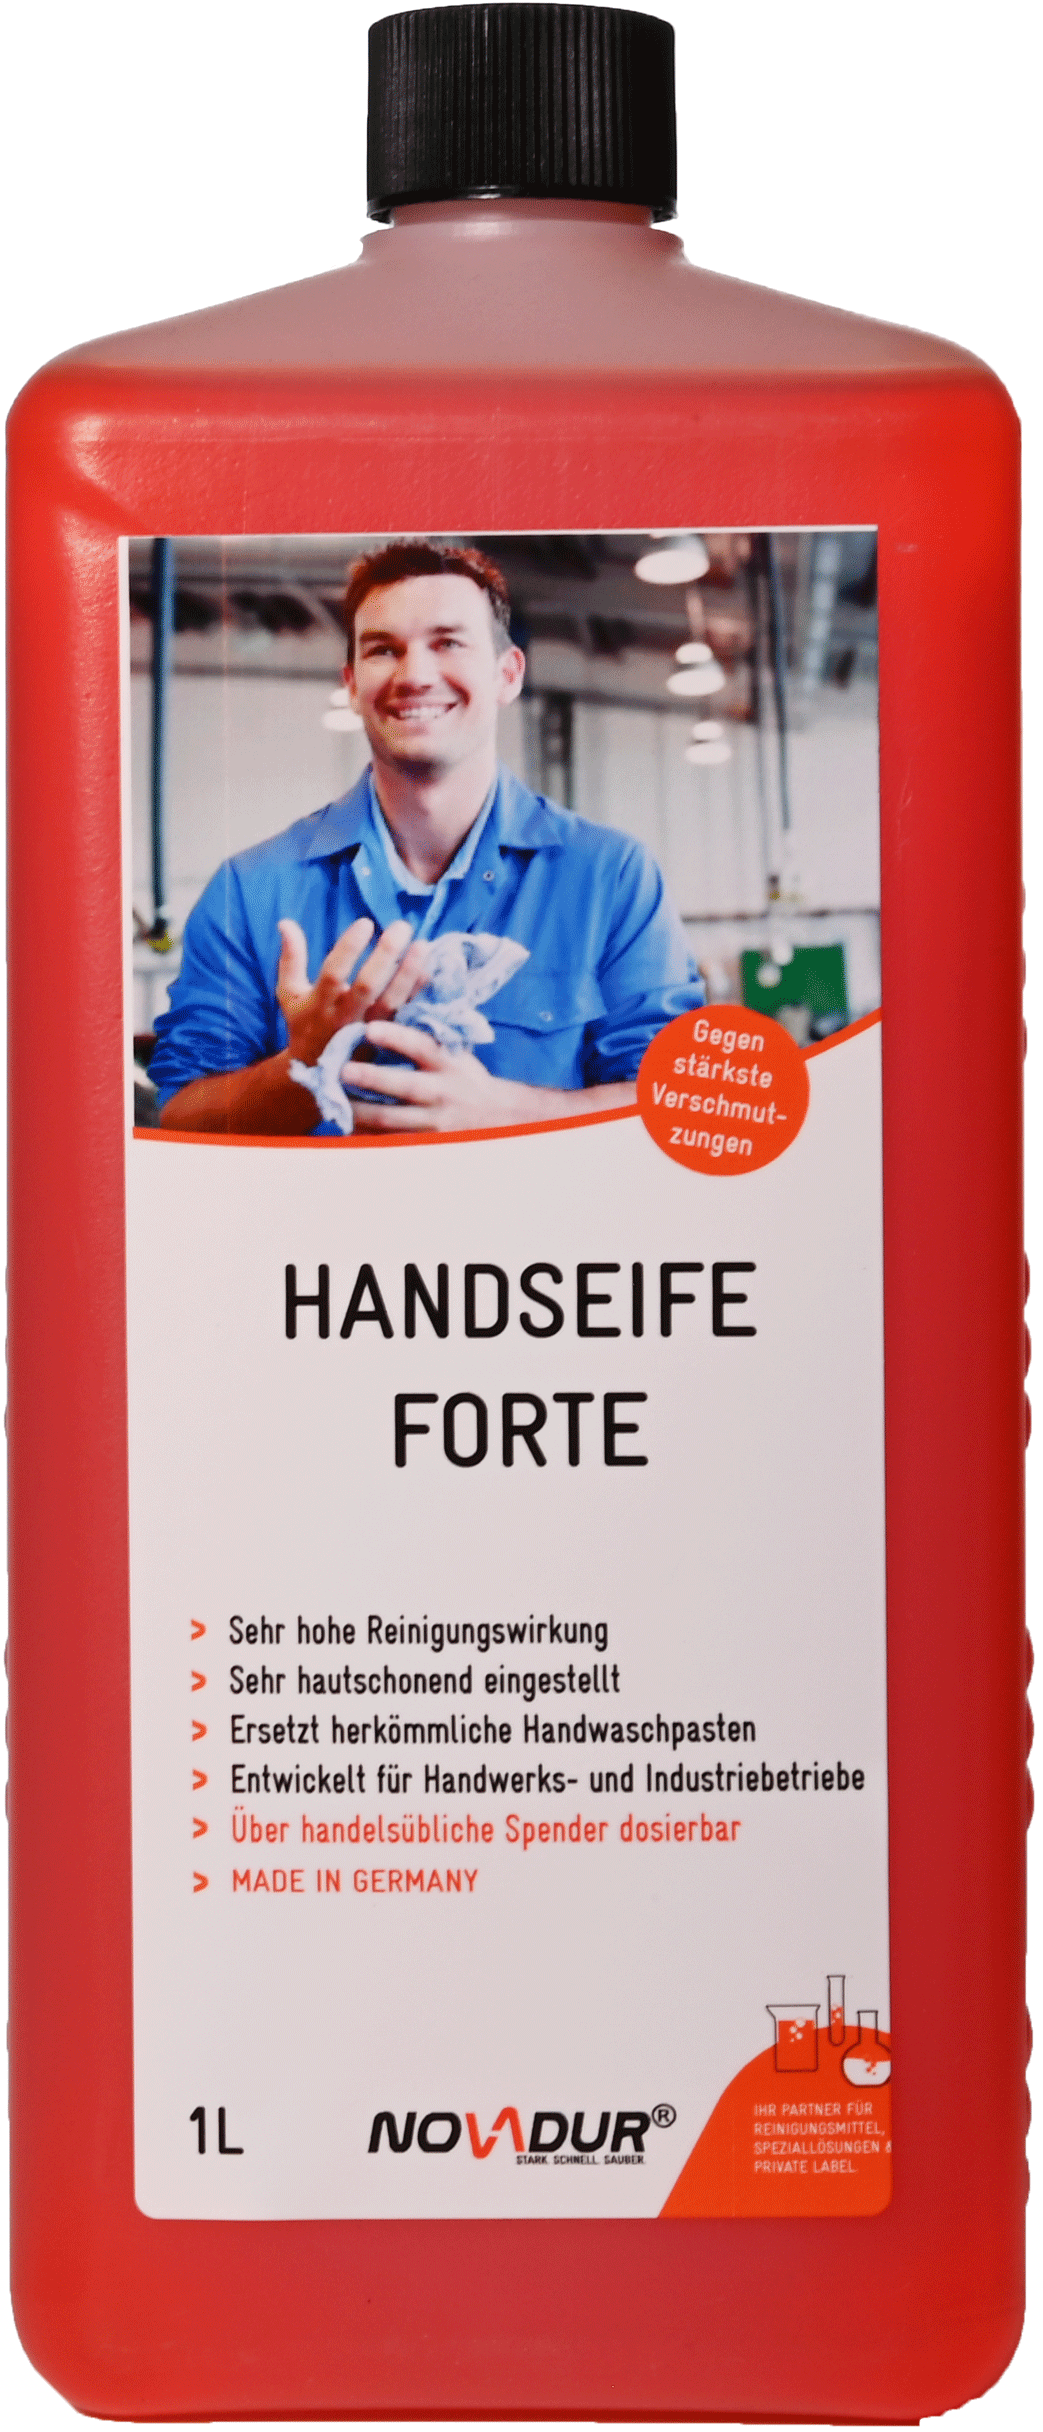 Handseife Forte